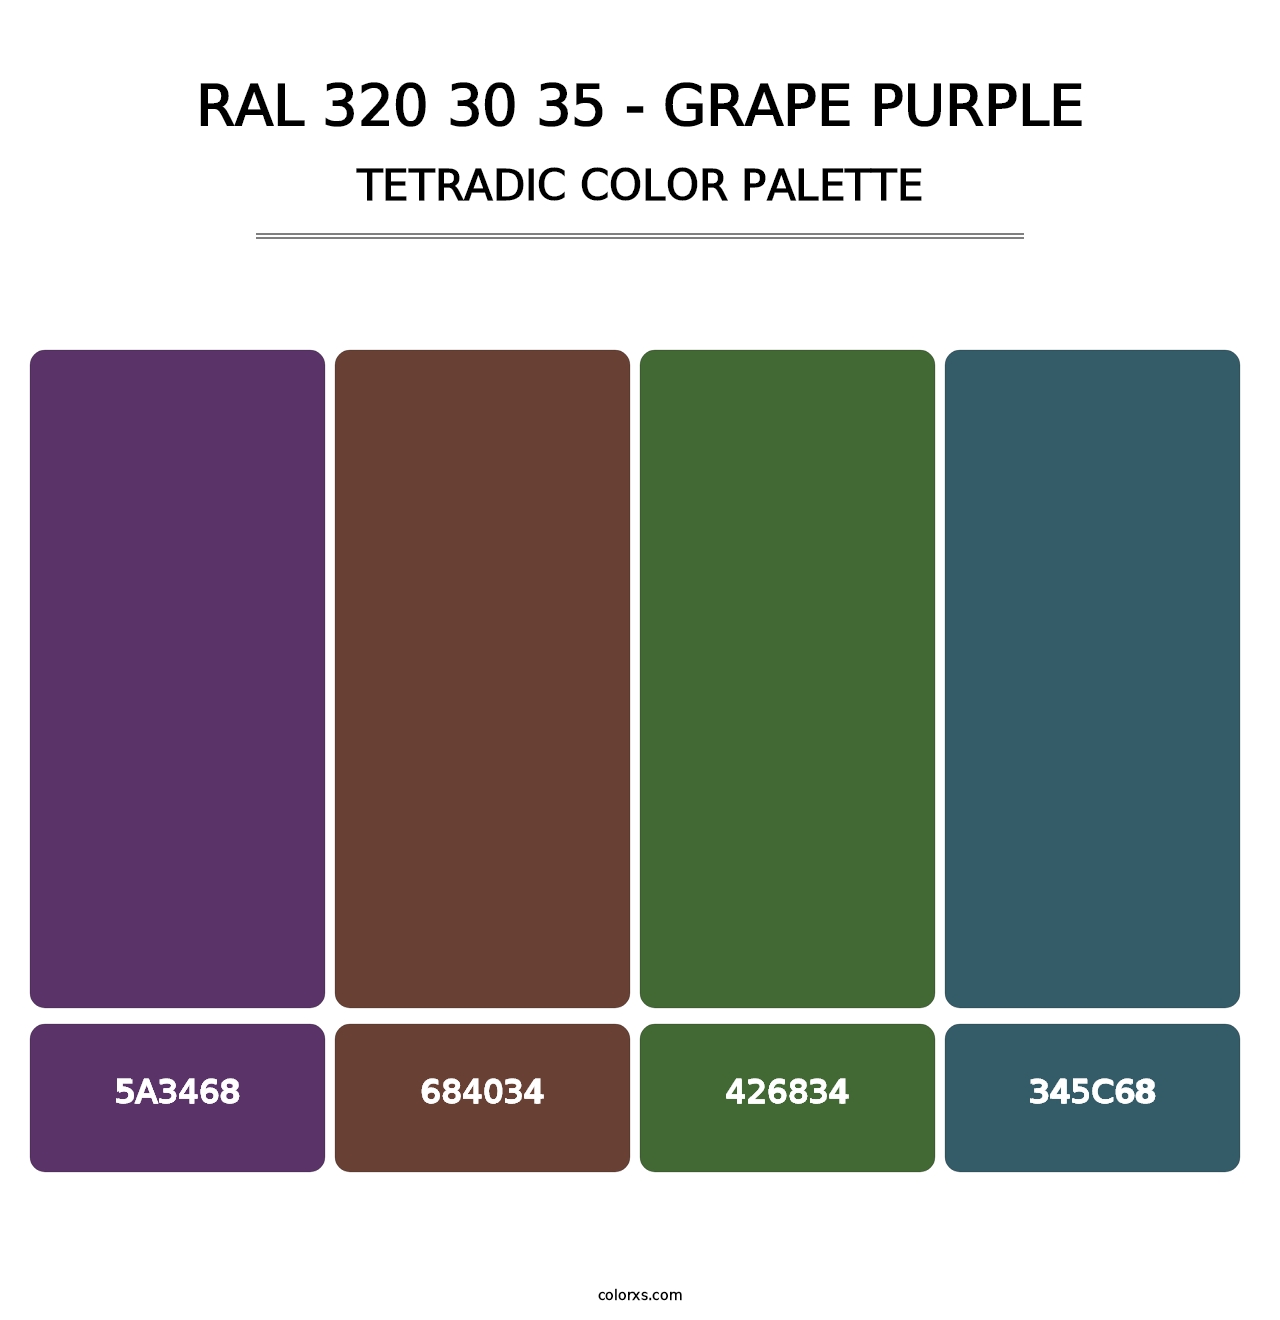 RAL 320 30 35 - Grape Purple - Tetradic Color Palette